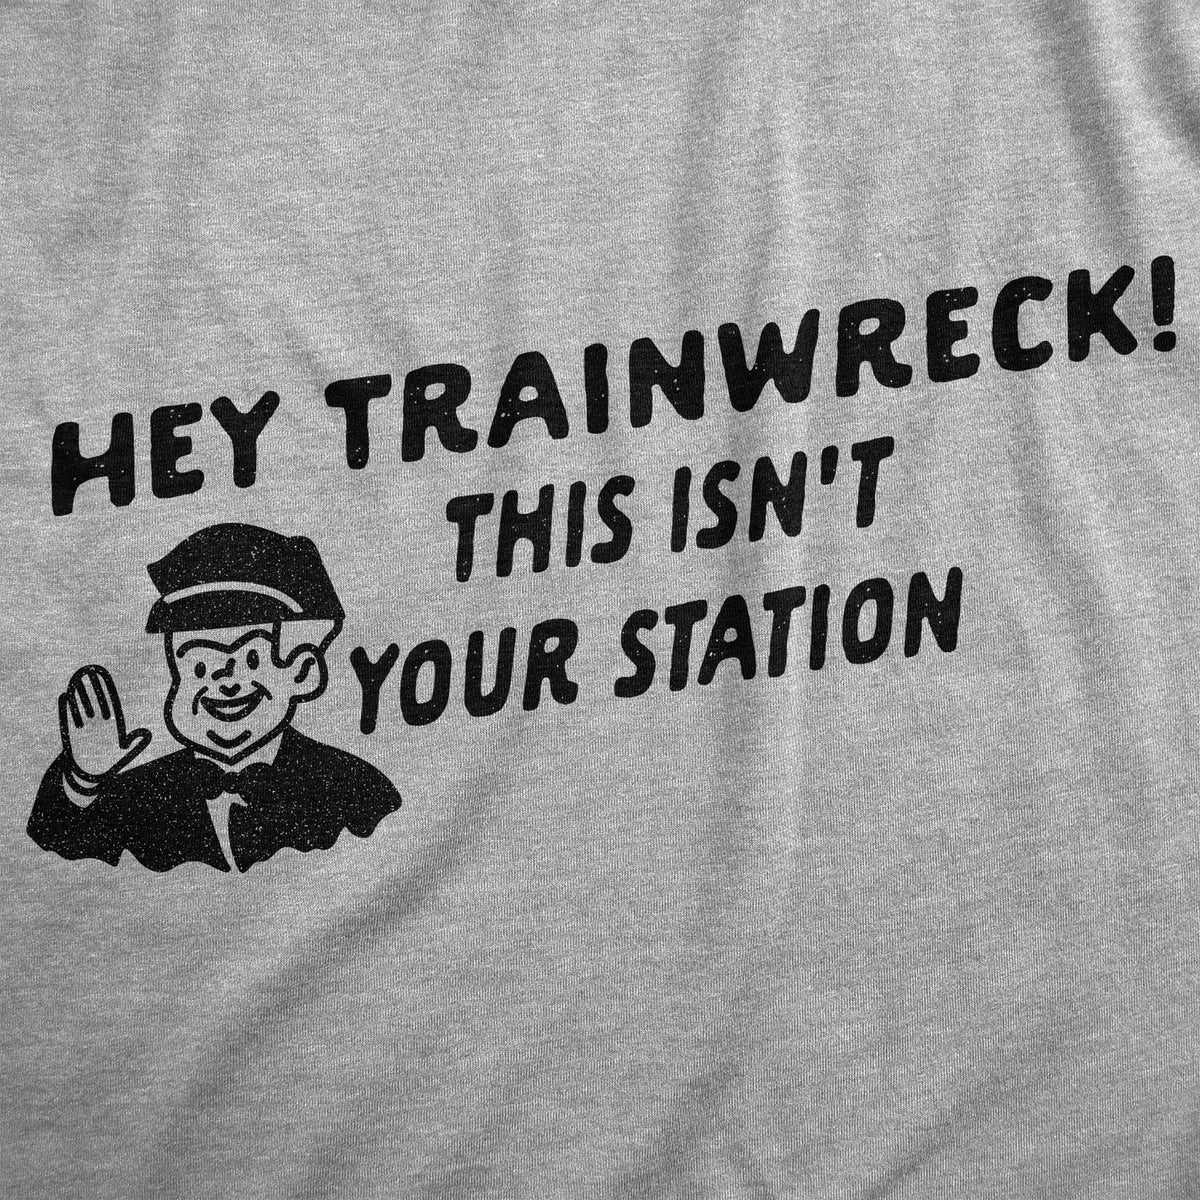 Hey Trainwreck Men&#39;s Tshirt - Crazy Dog T-Shirts